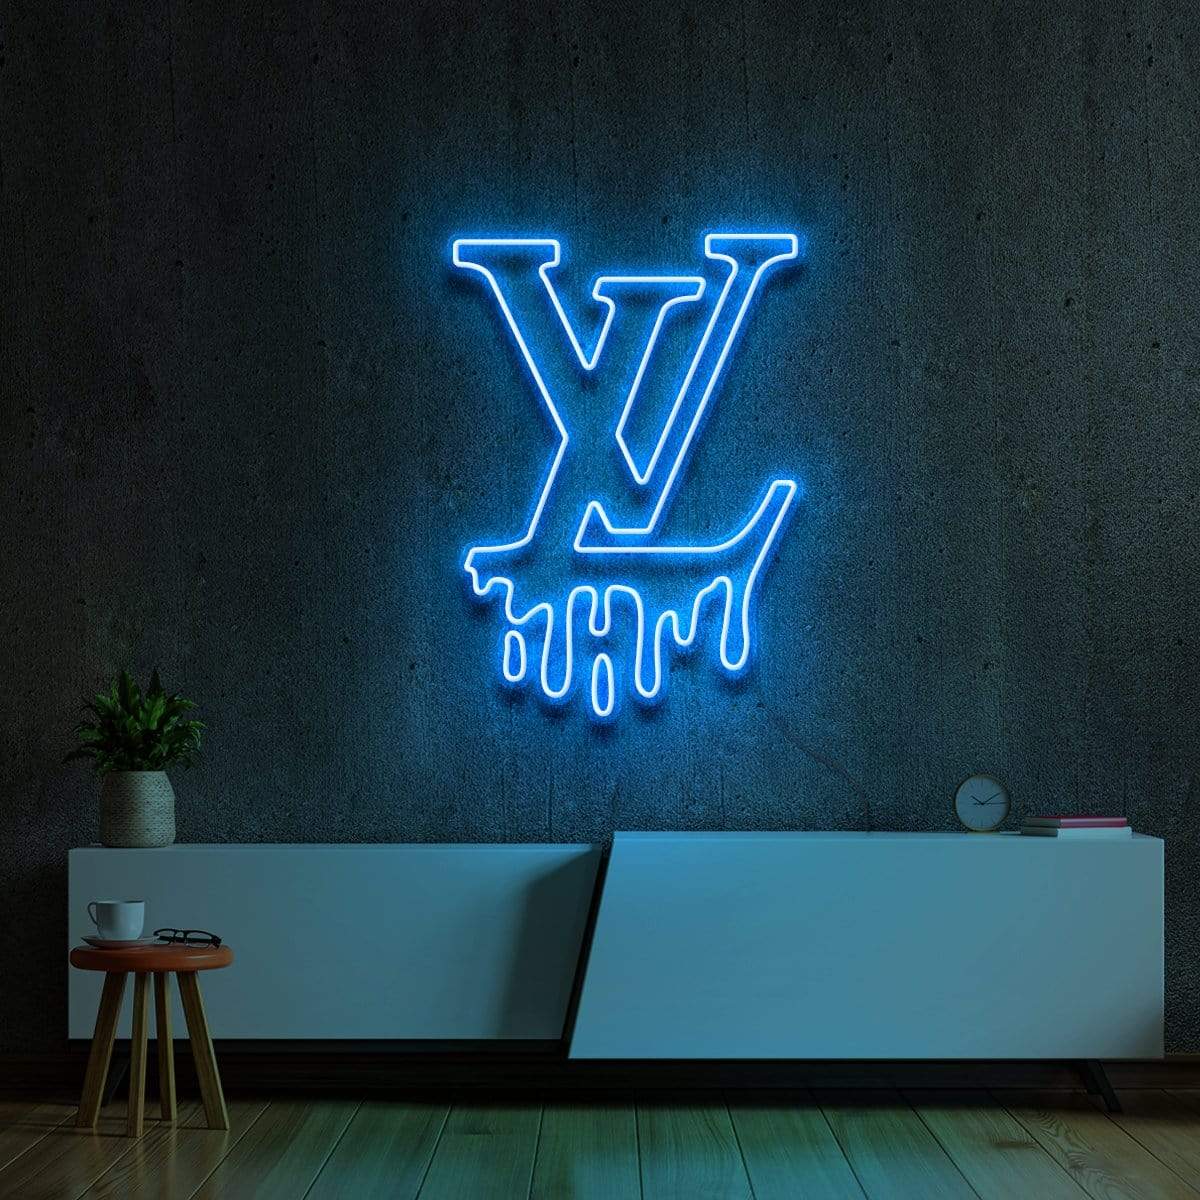 Louis Vuitton Logo Light-up Sign W/ Large Lv Design